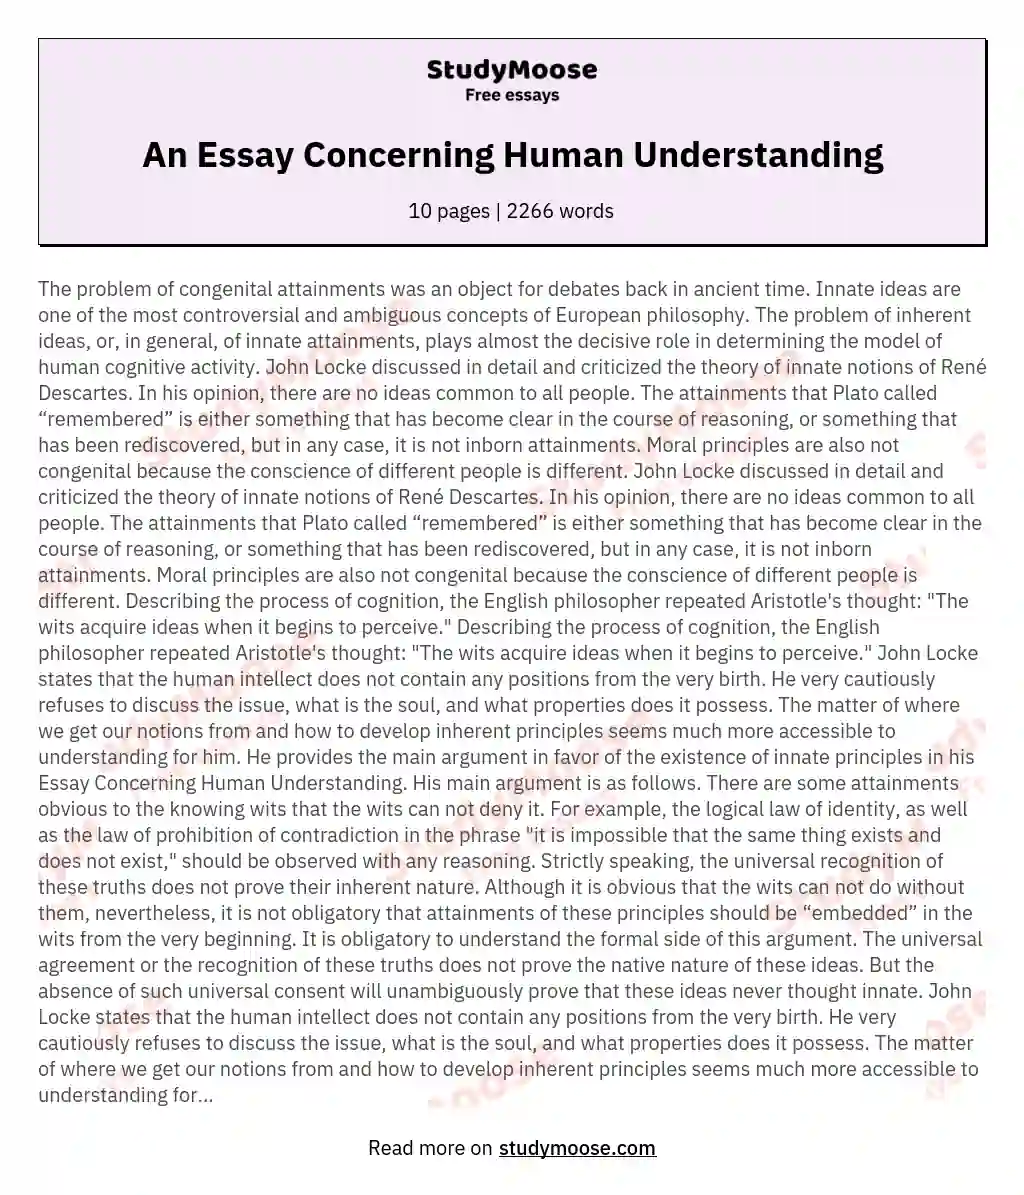 An Essay Concerning Human Understanding essay